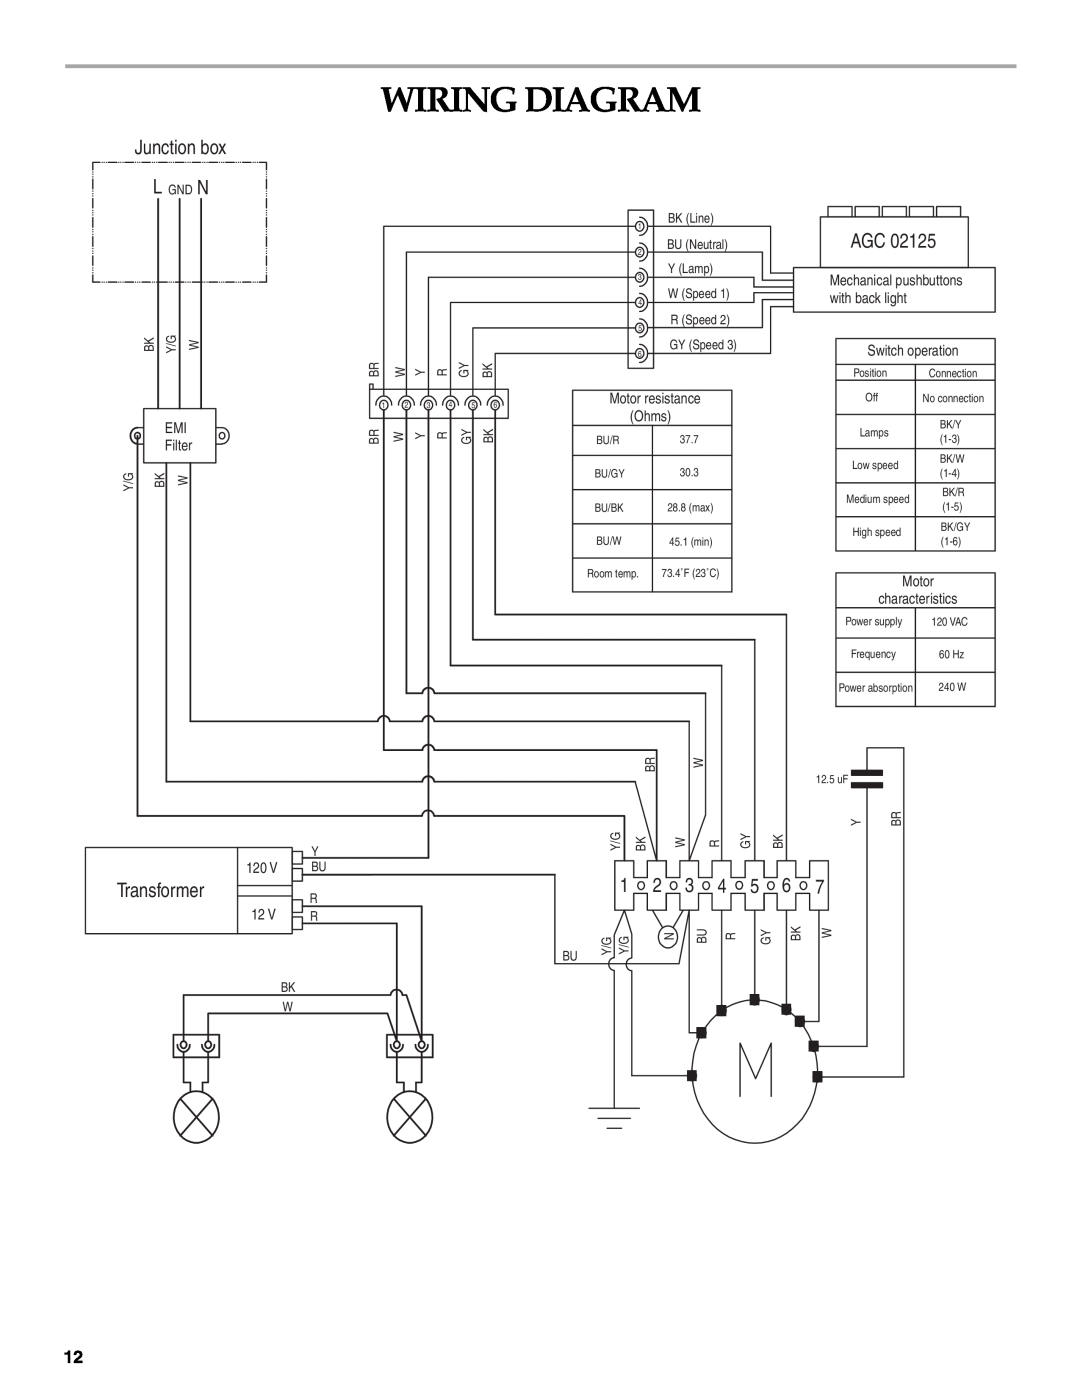 KitchenAid LI3Y7C/W10322991C Wiring Diagram, Junction box, Transformer, L Gnd N, BK Line, Y Lamp, Motor resistance 